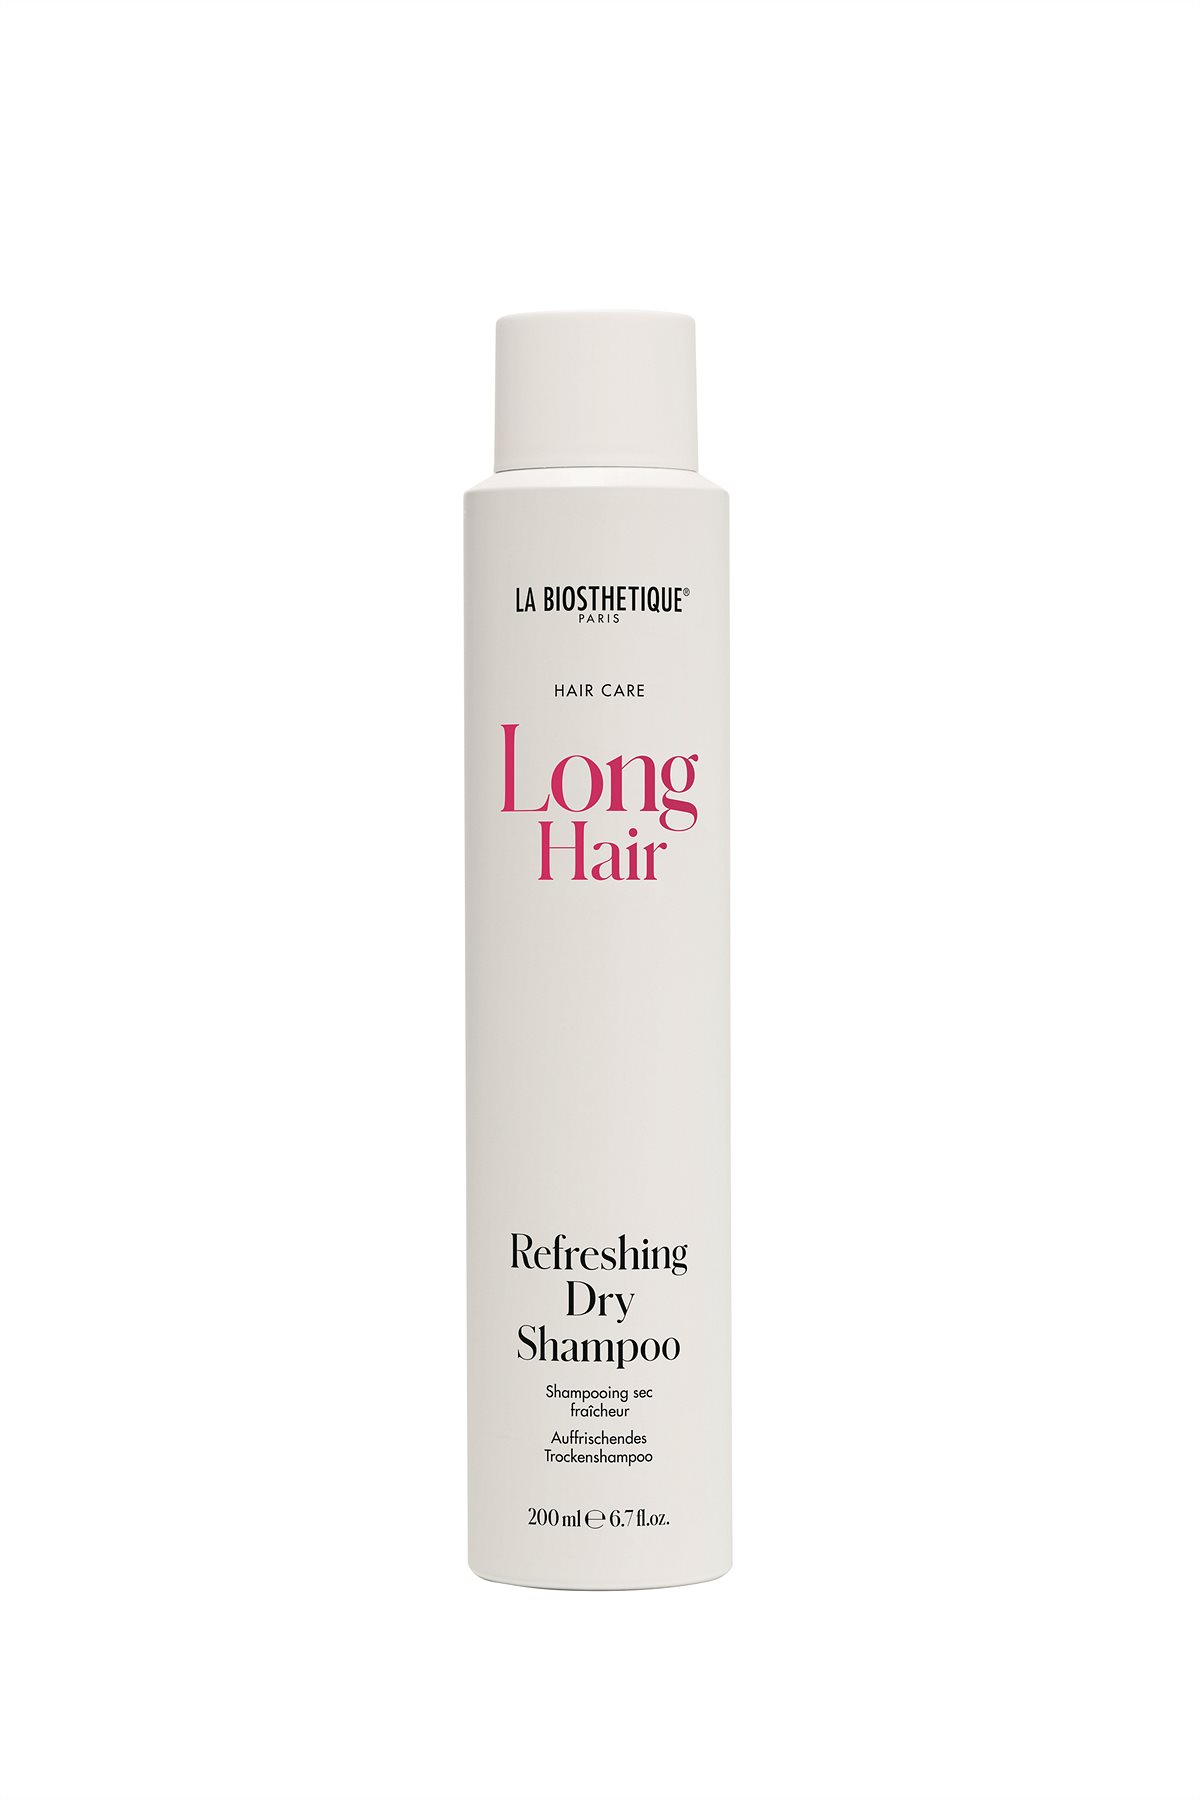 La Biosthétique Long Hair_Refreshing Dry Shampoo_200ml_EUR 27,50